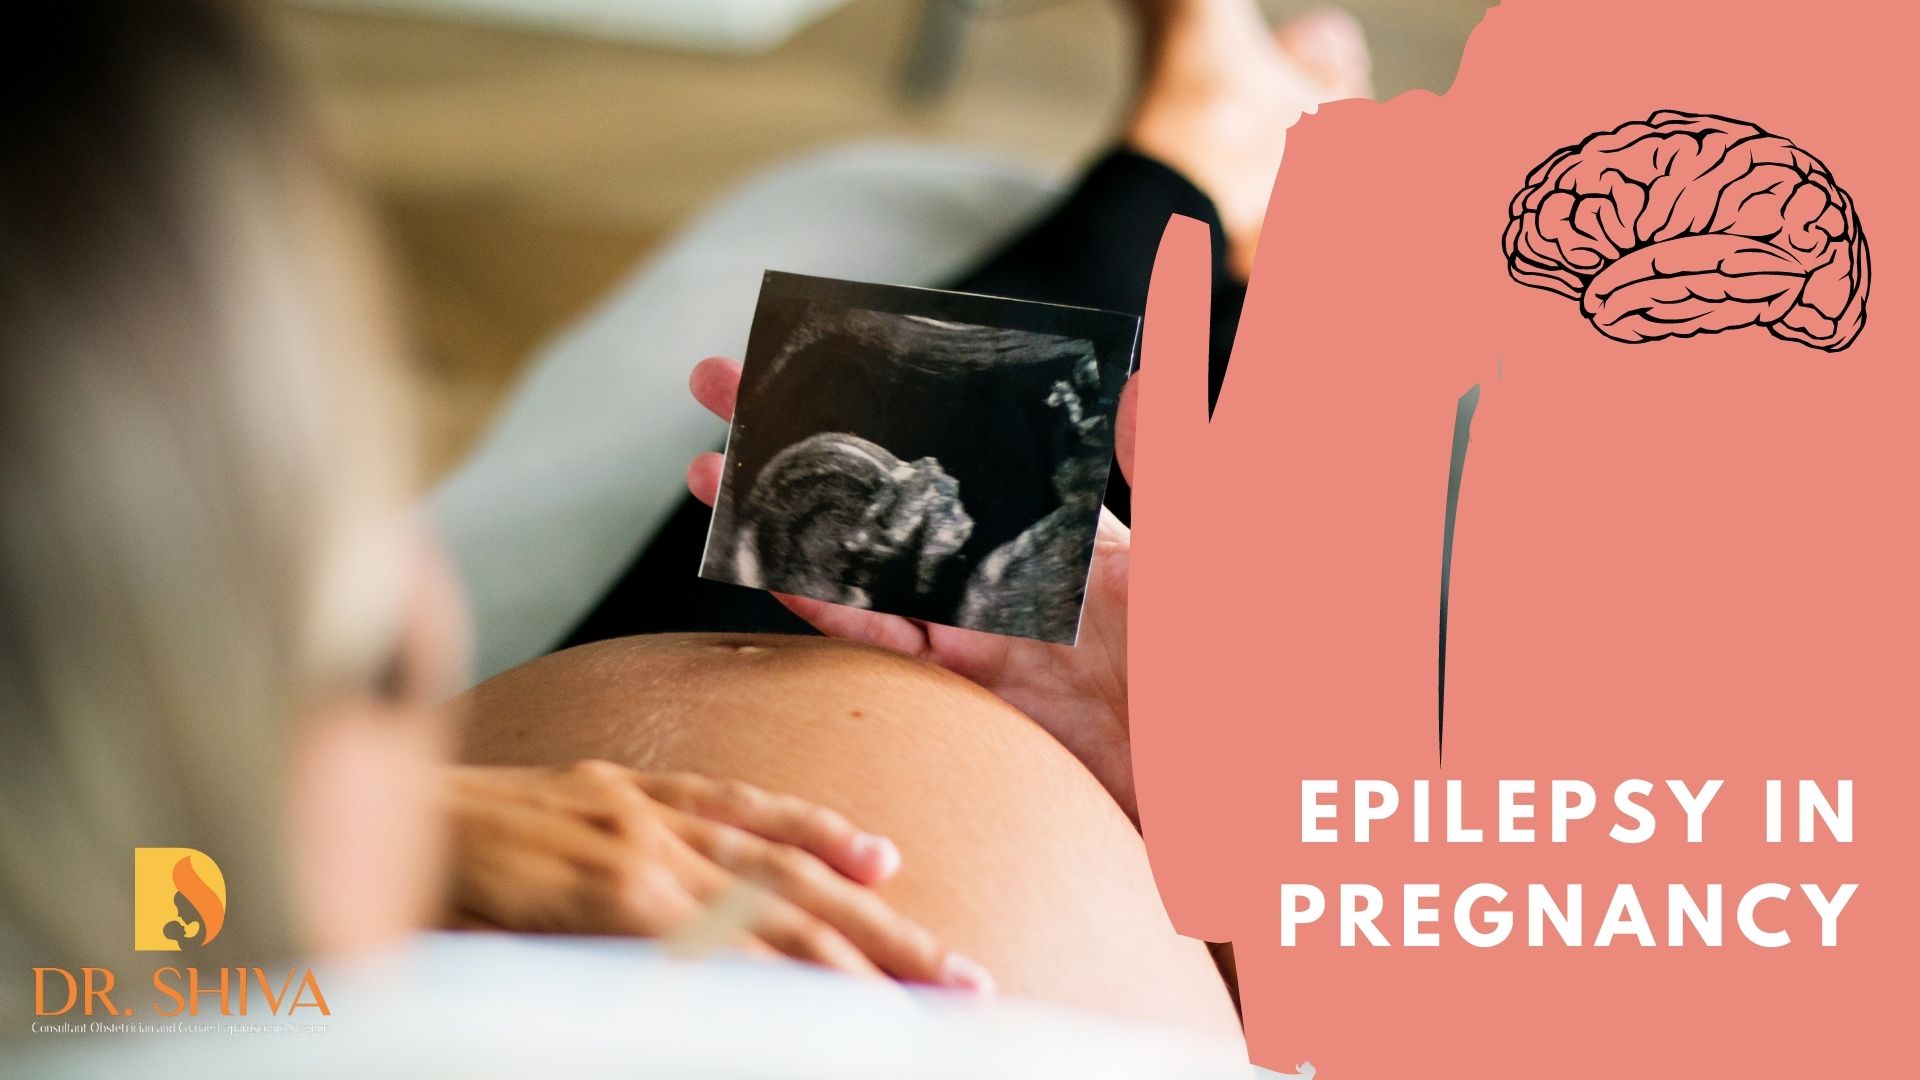 Epilepsy in pregnancy